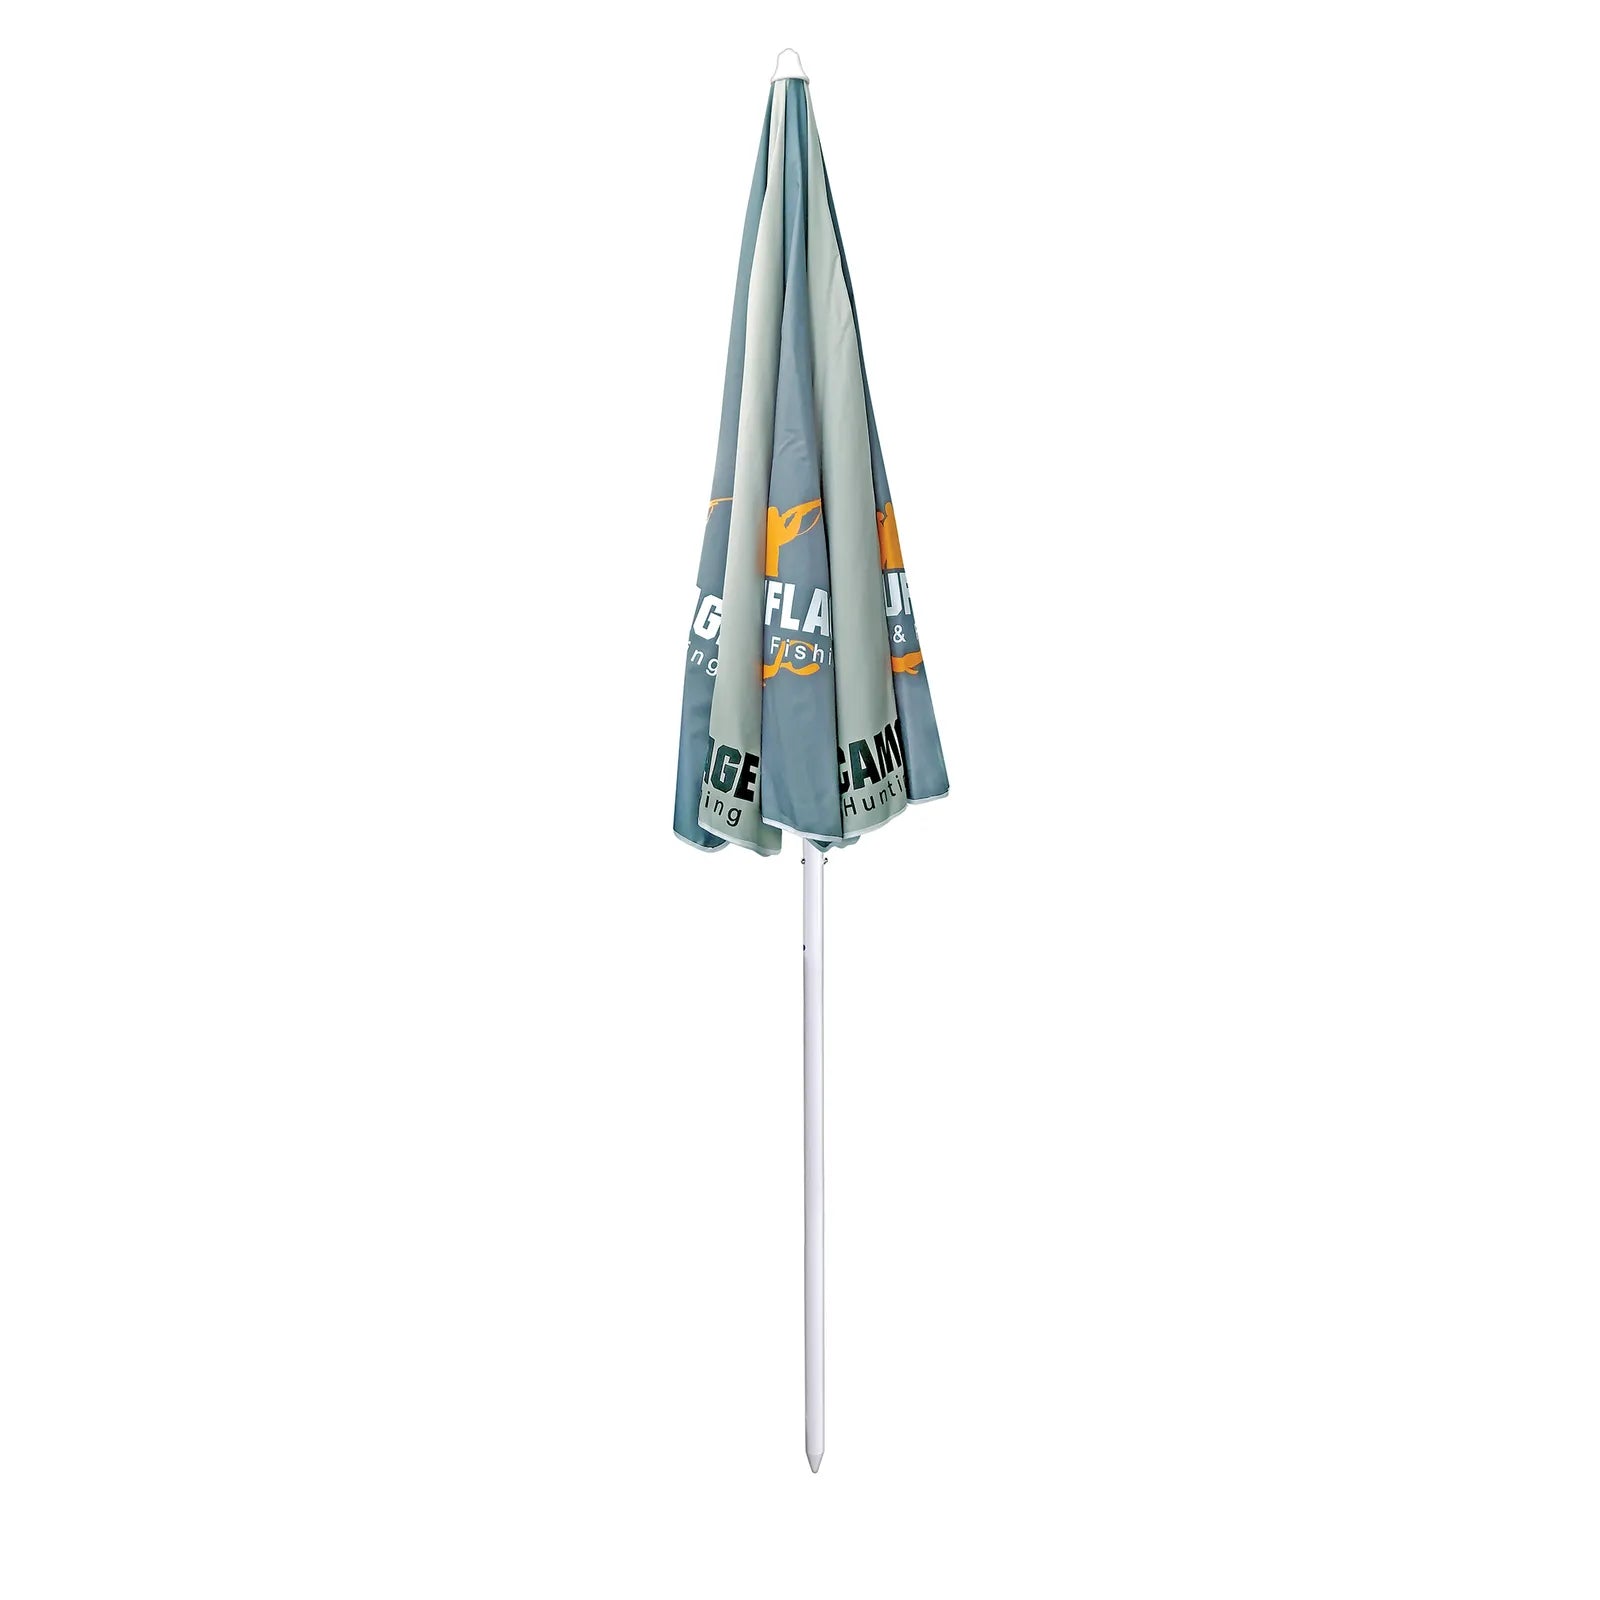 Camouflage - Beach Umbrella (227CM)